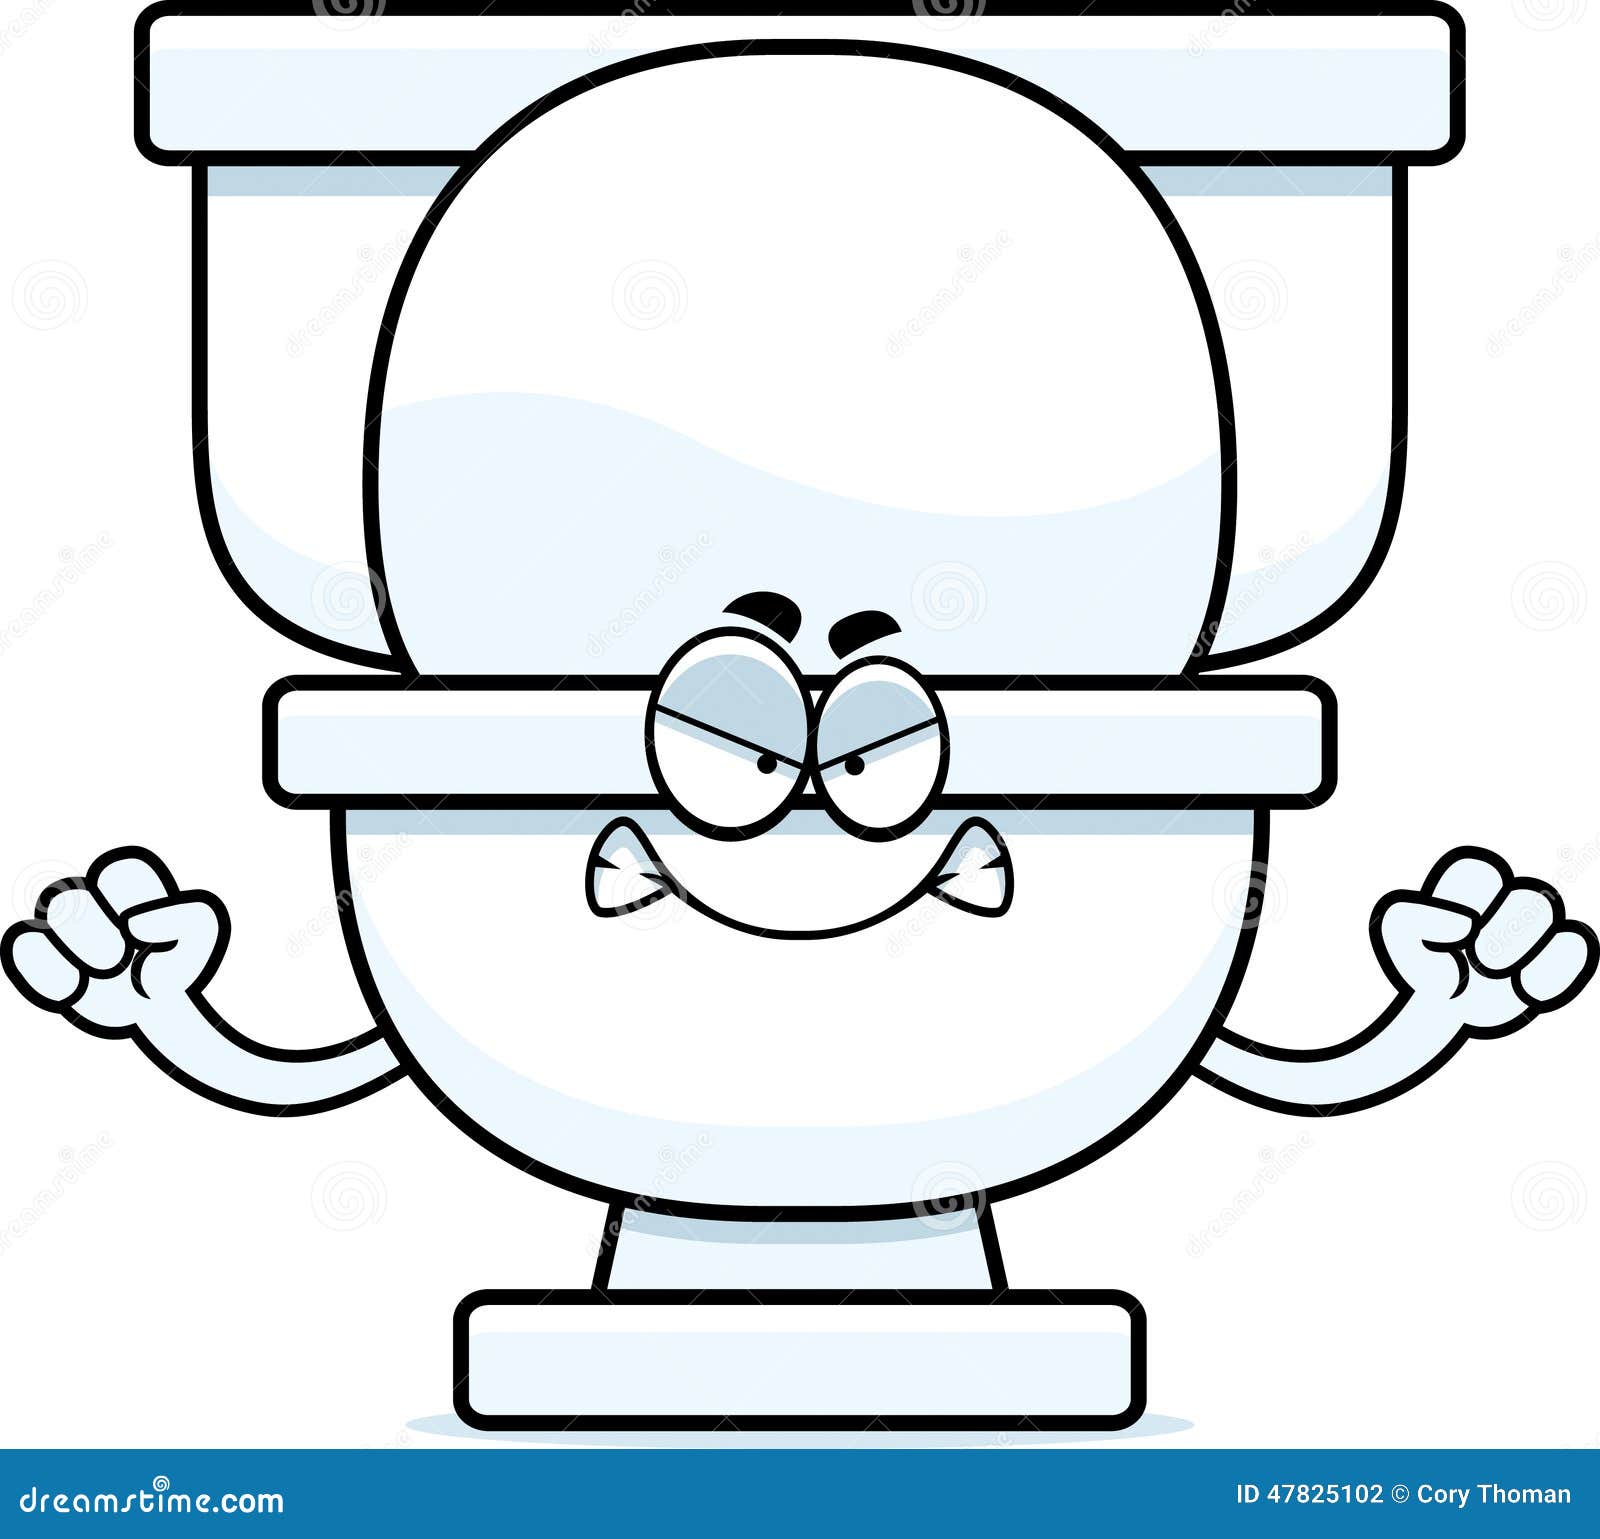 animated clip art toilet - photo #33